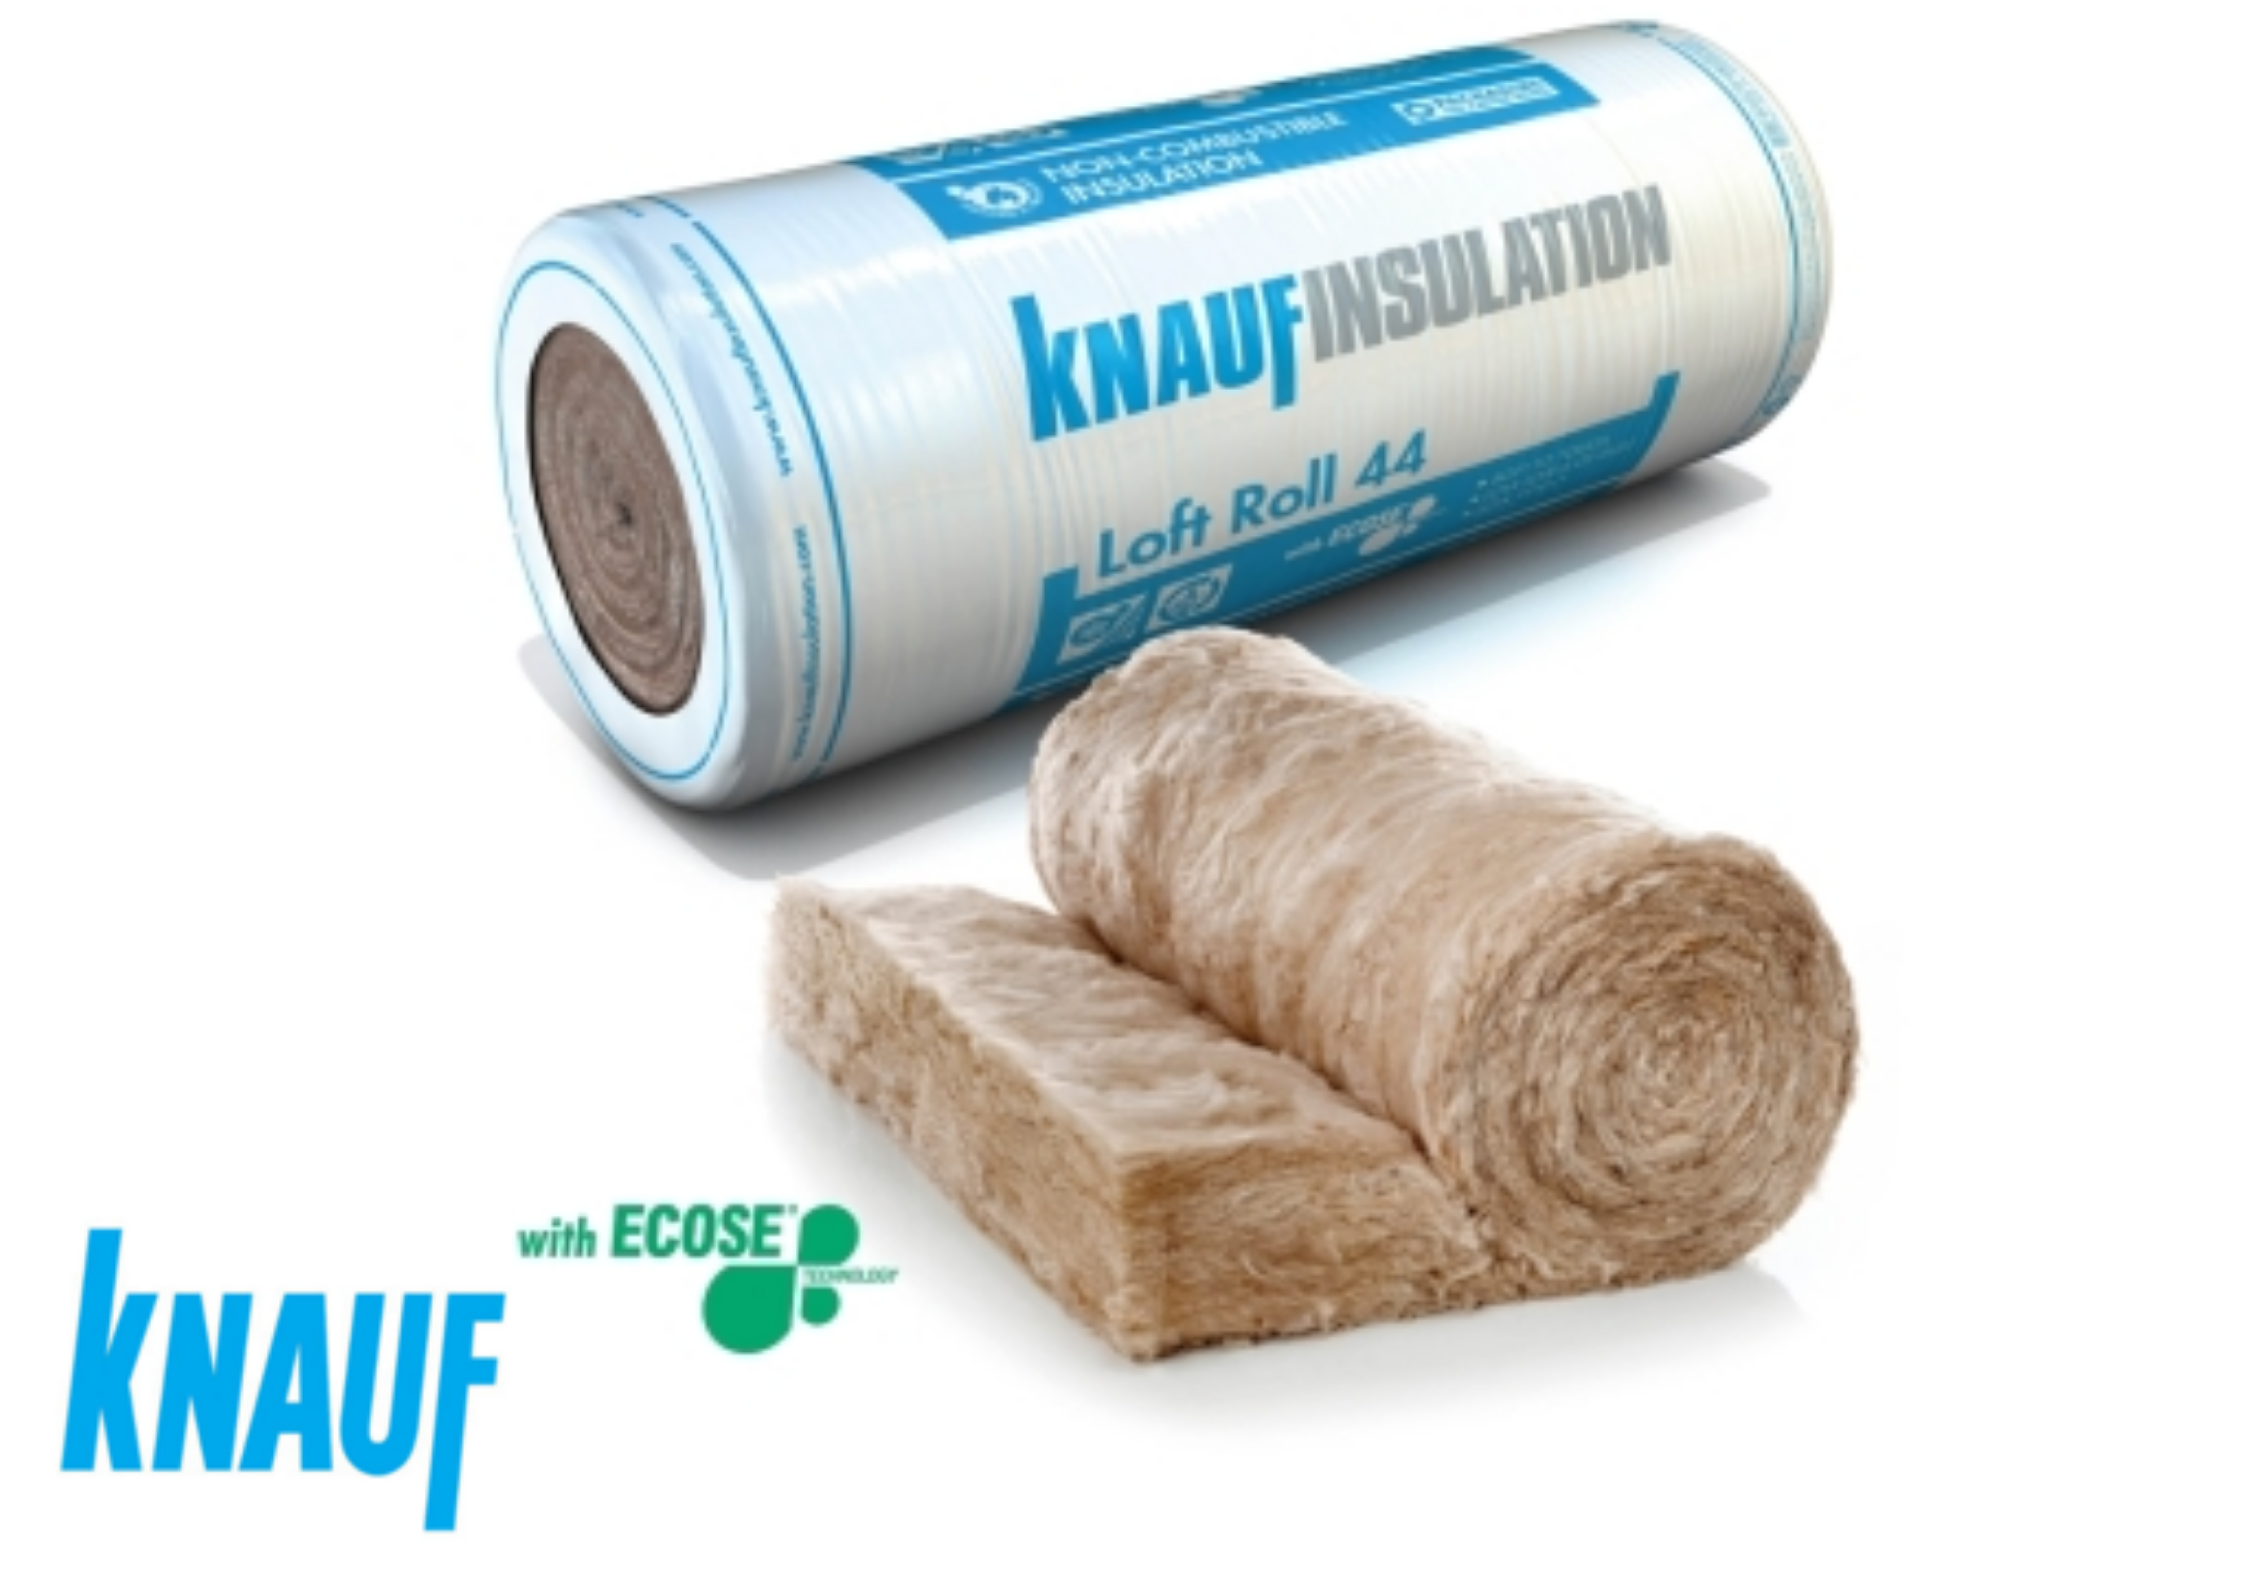 Knauf Insulation Knauf Loft Roll 44 Earthwool Combi-Cut